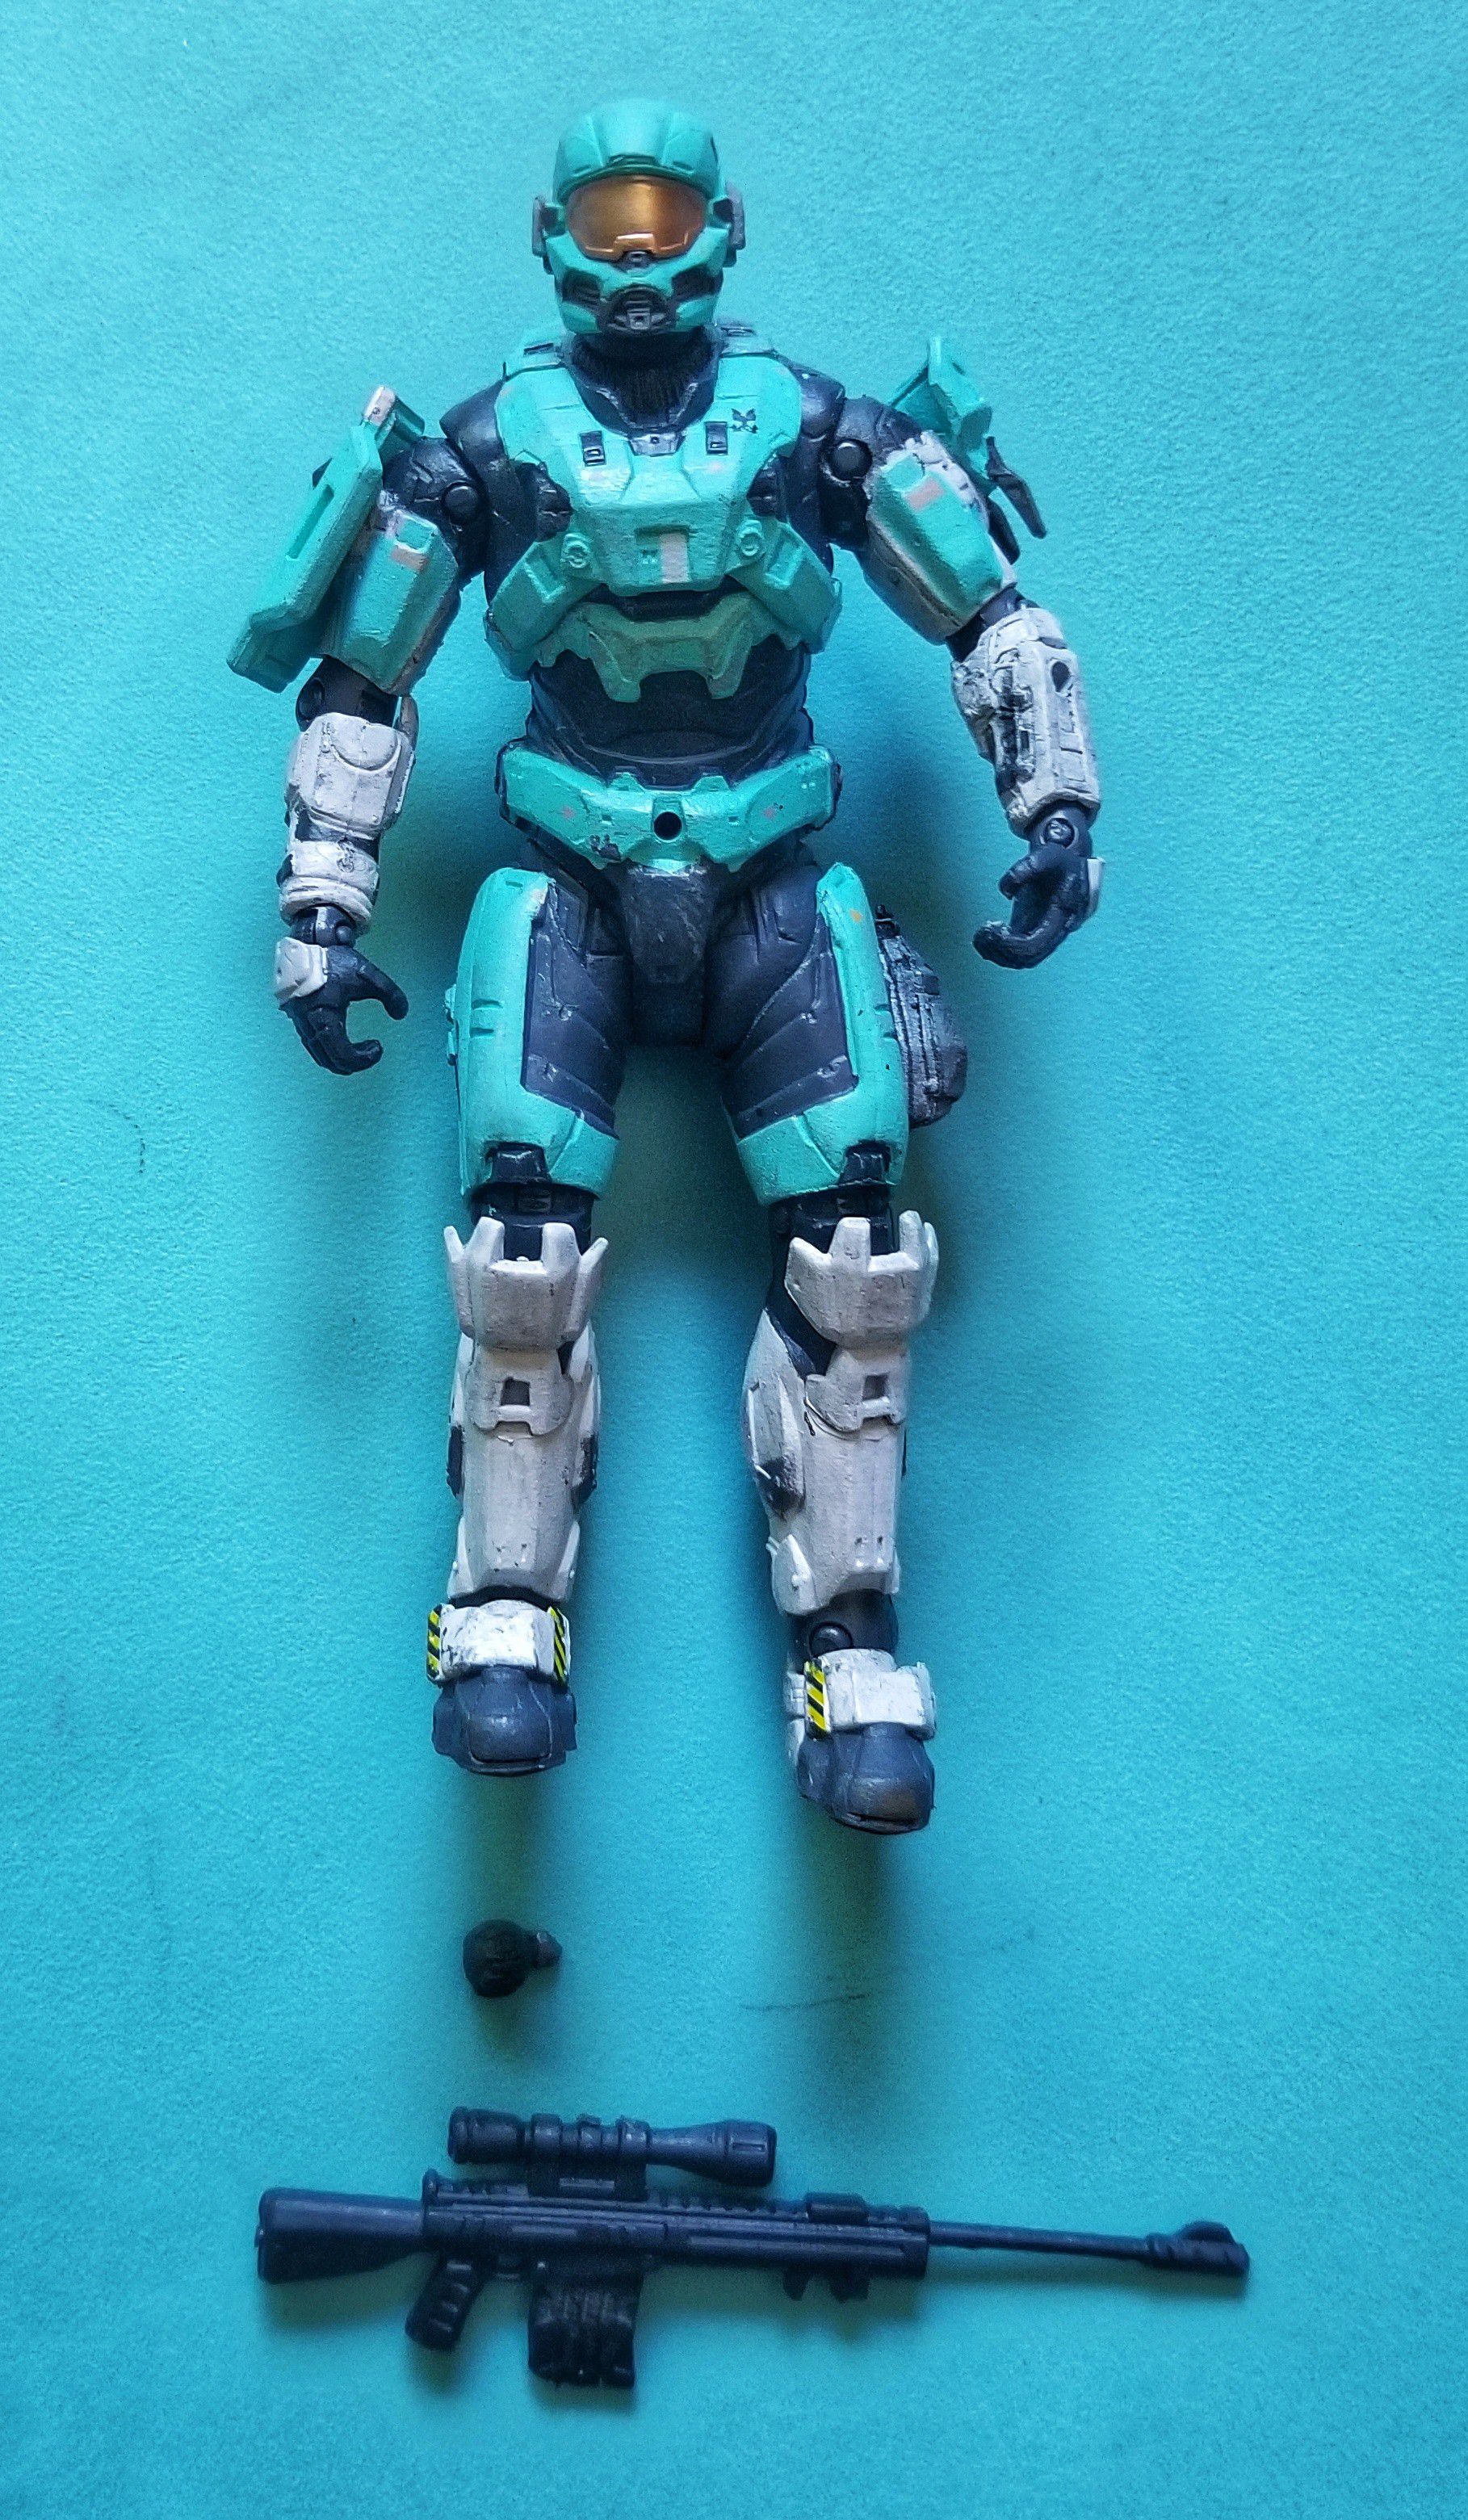 McFarlane toys two Halo action figures